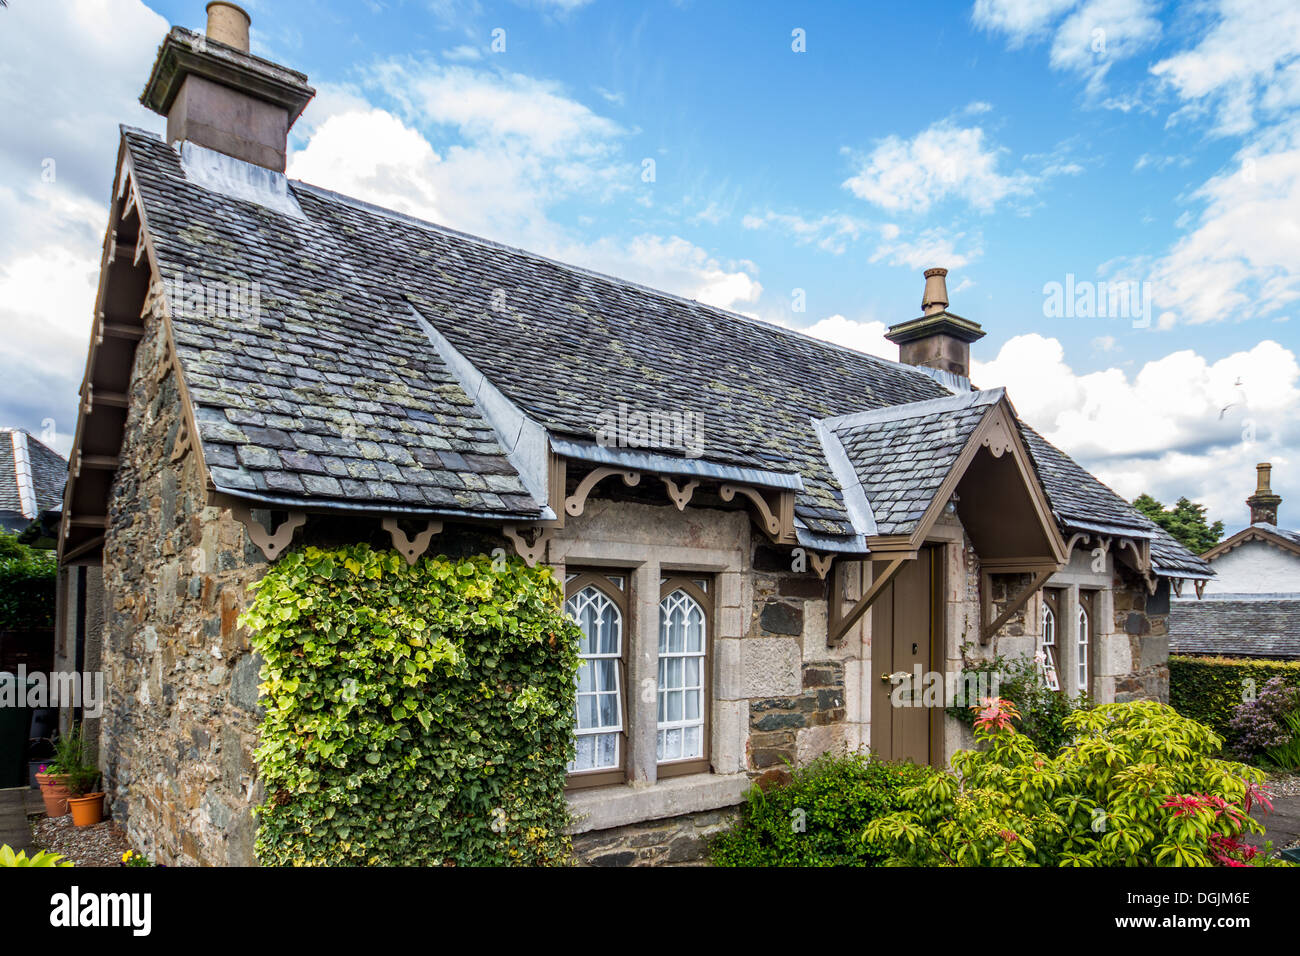 Cottage in scotland Stock Photo